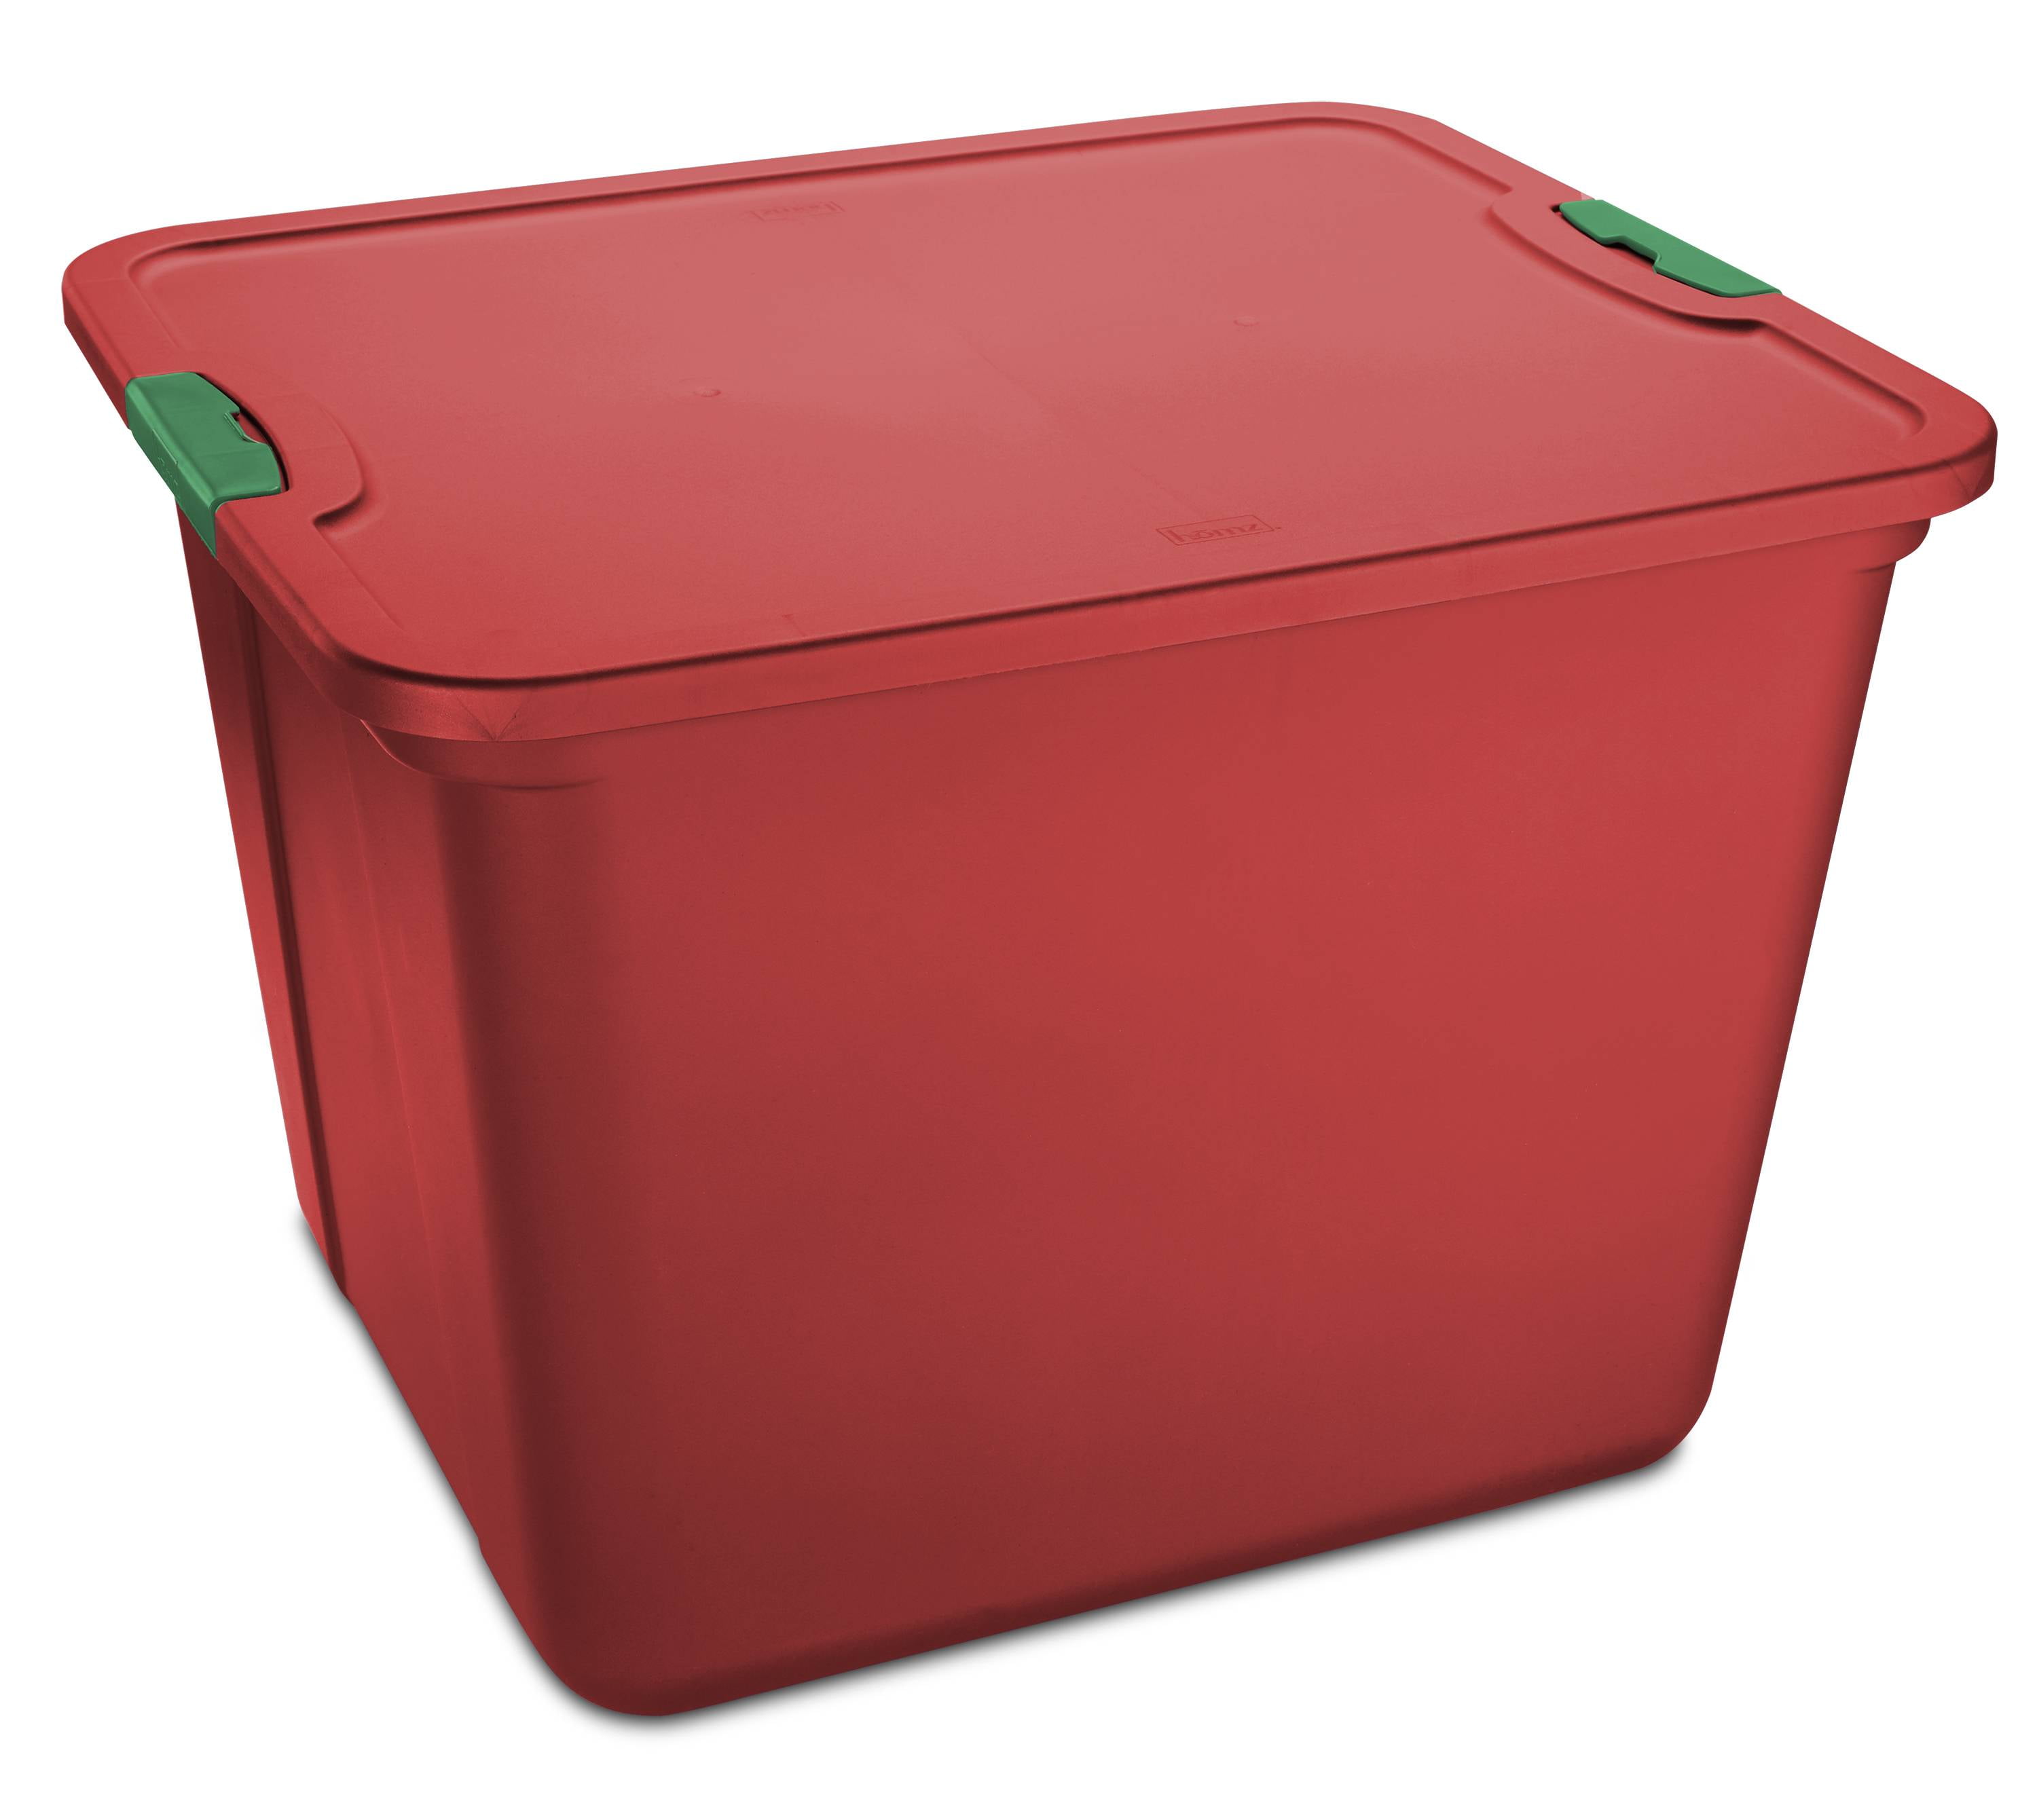 6 x Bright Red 50ltr Heavy Duty Plastic Storage Tote Boxes 55 x 38 x 32cm 